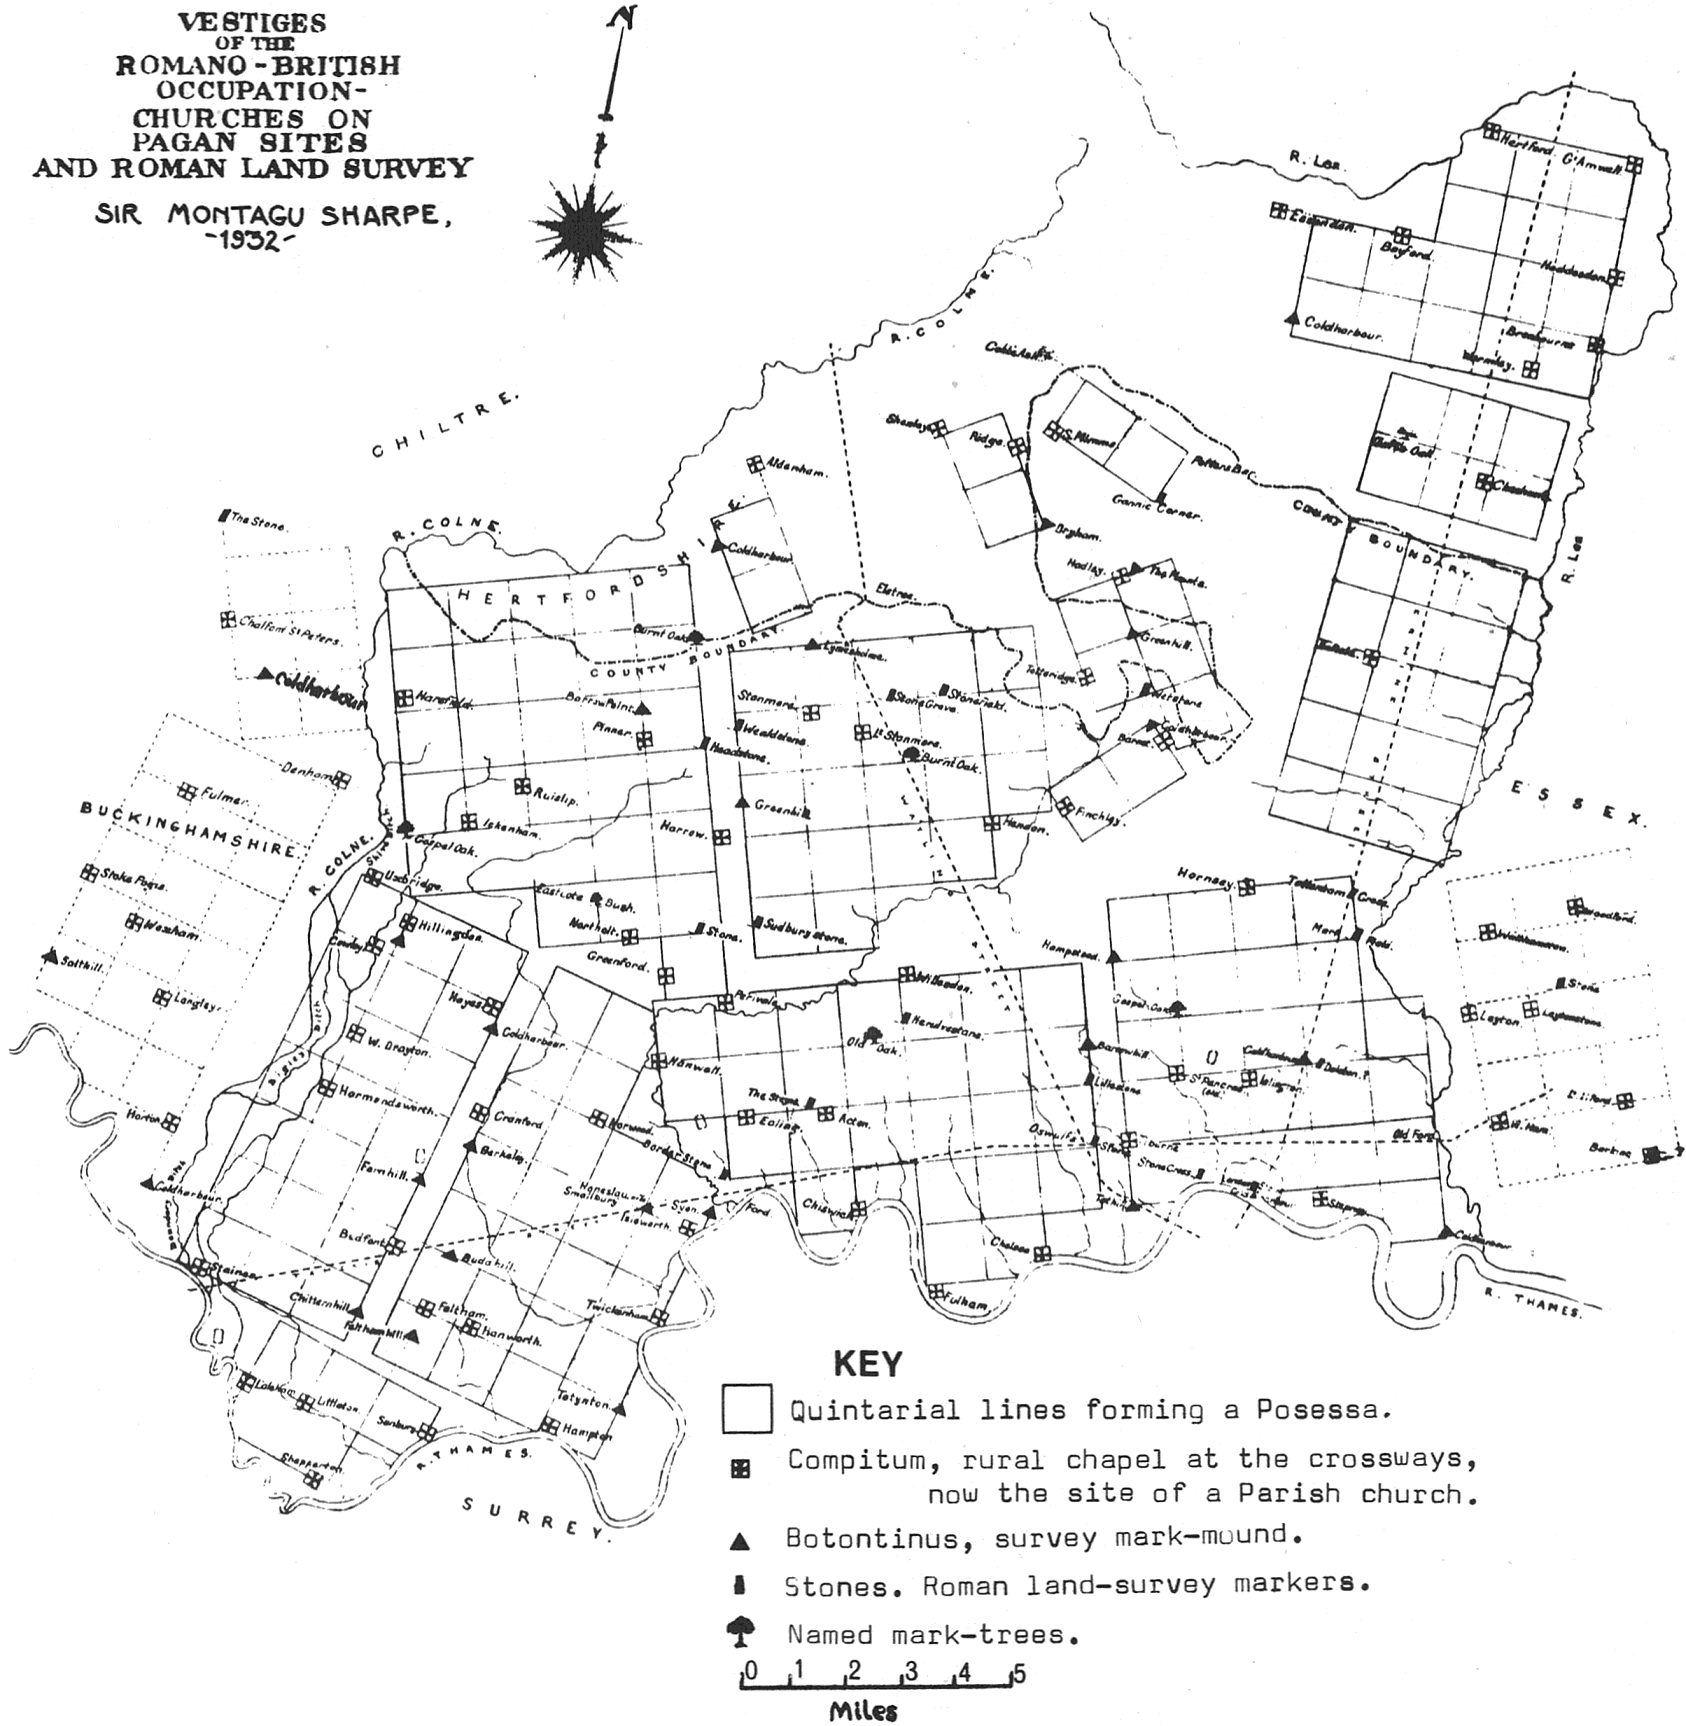 Roman survey of Middlesex, according to Sir Montagu Sharpe